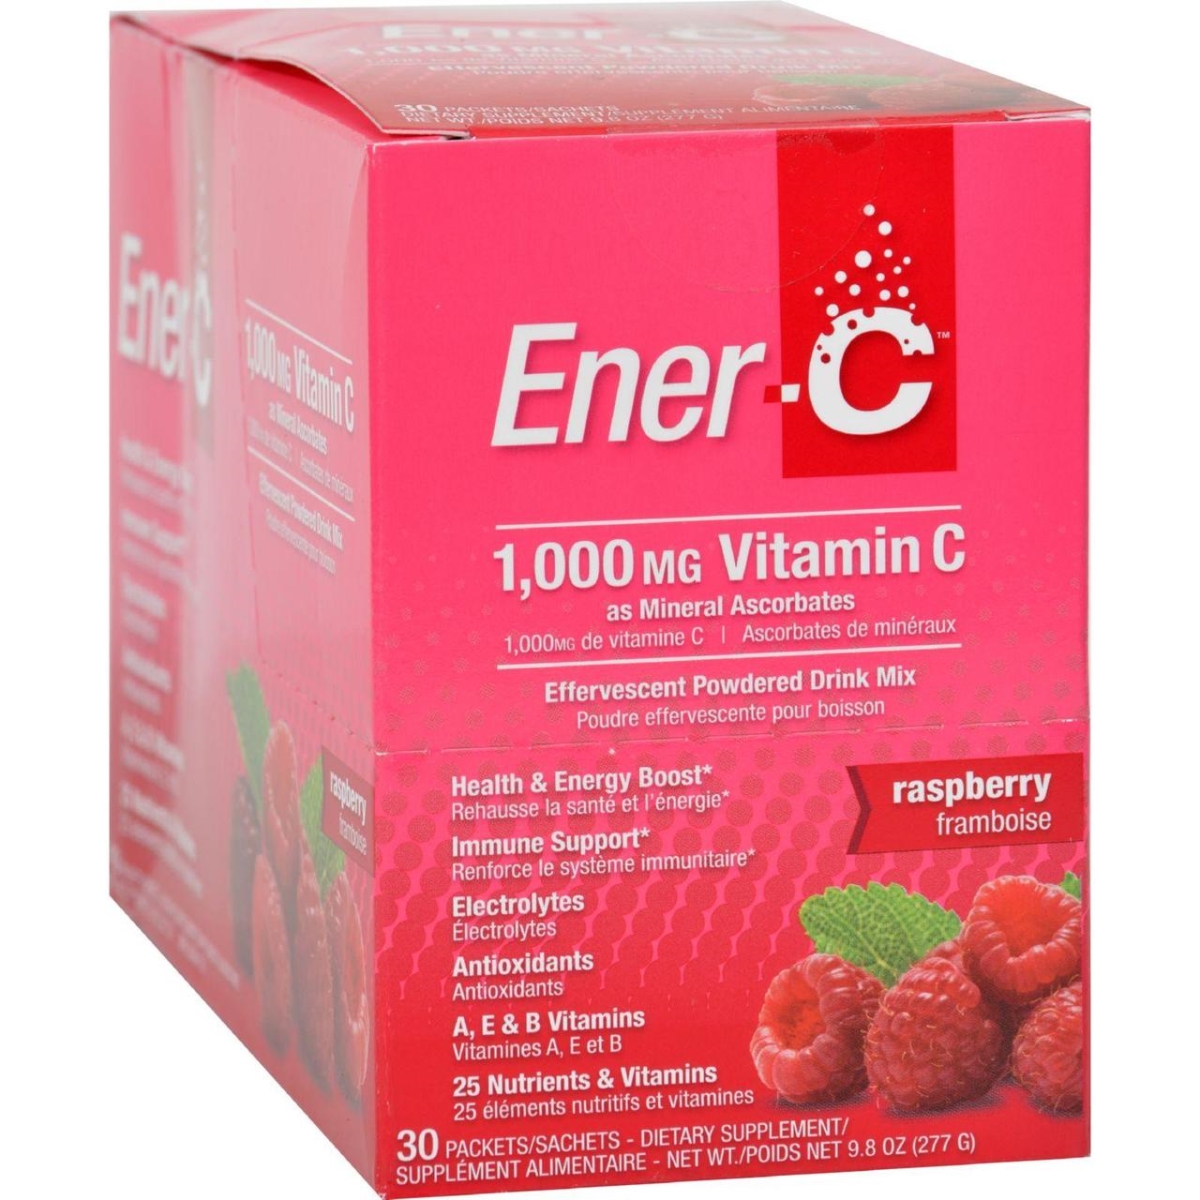 Hg1275213 1000 Mg Vitamin Drink Mix - Raspberry, 30 Packet